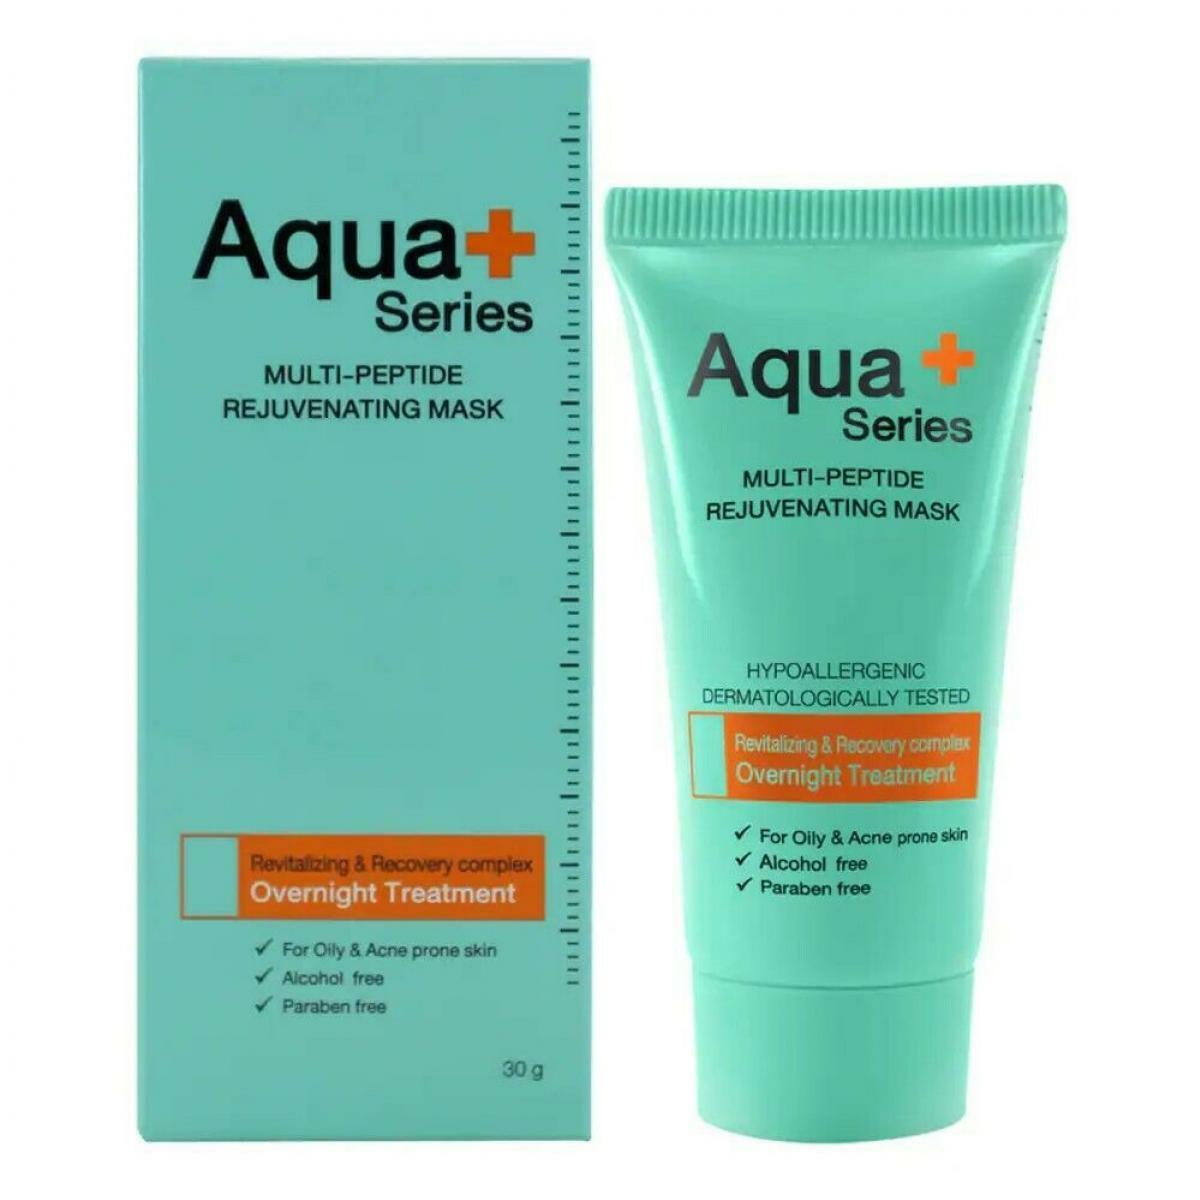 Aqua+ Series Multi-Peptide Rejuvenating Mask Purchase Product anti-aging Overnigh